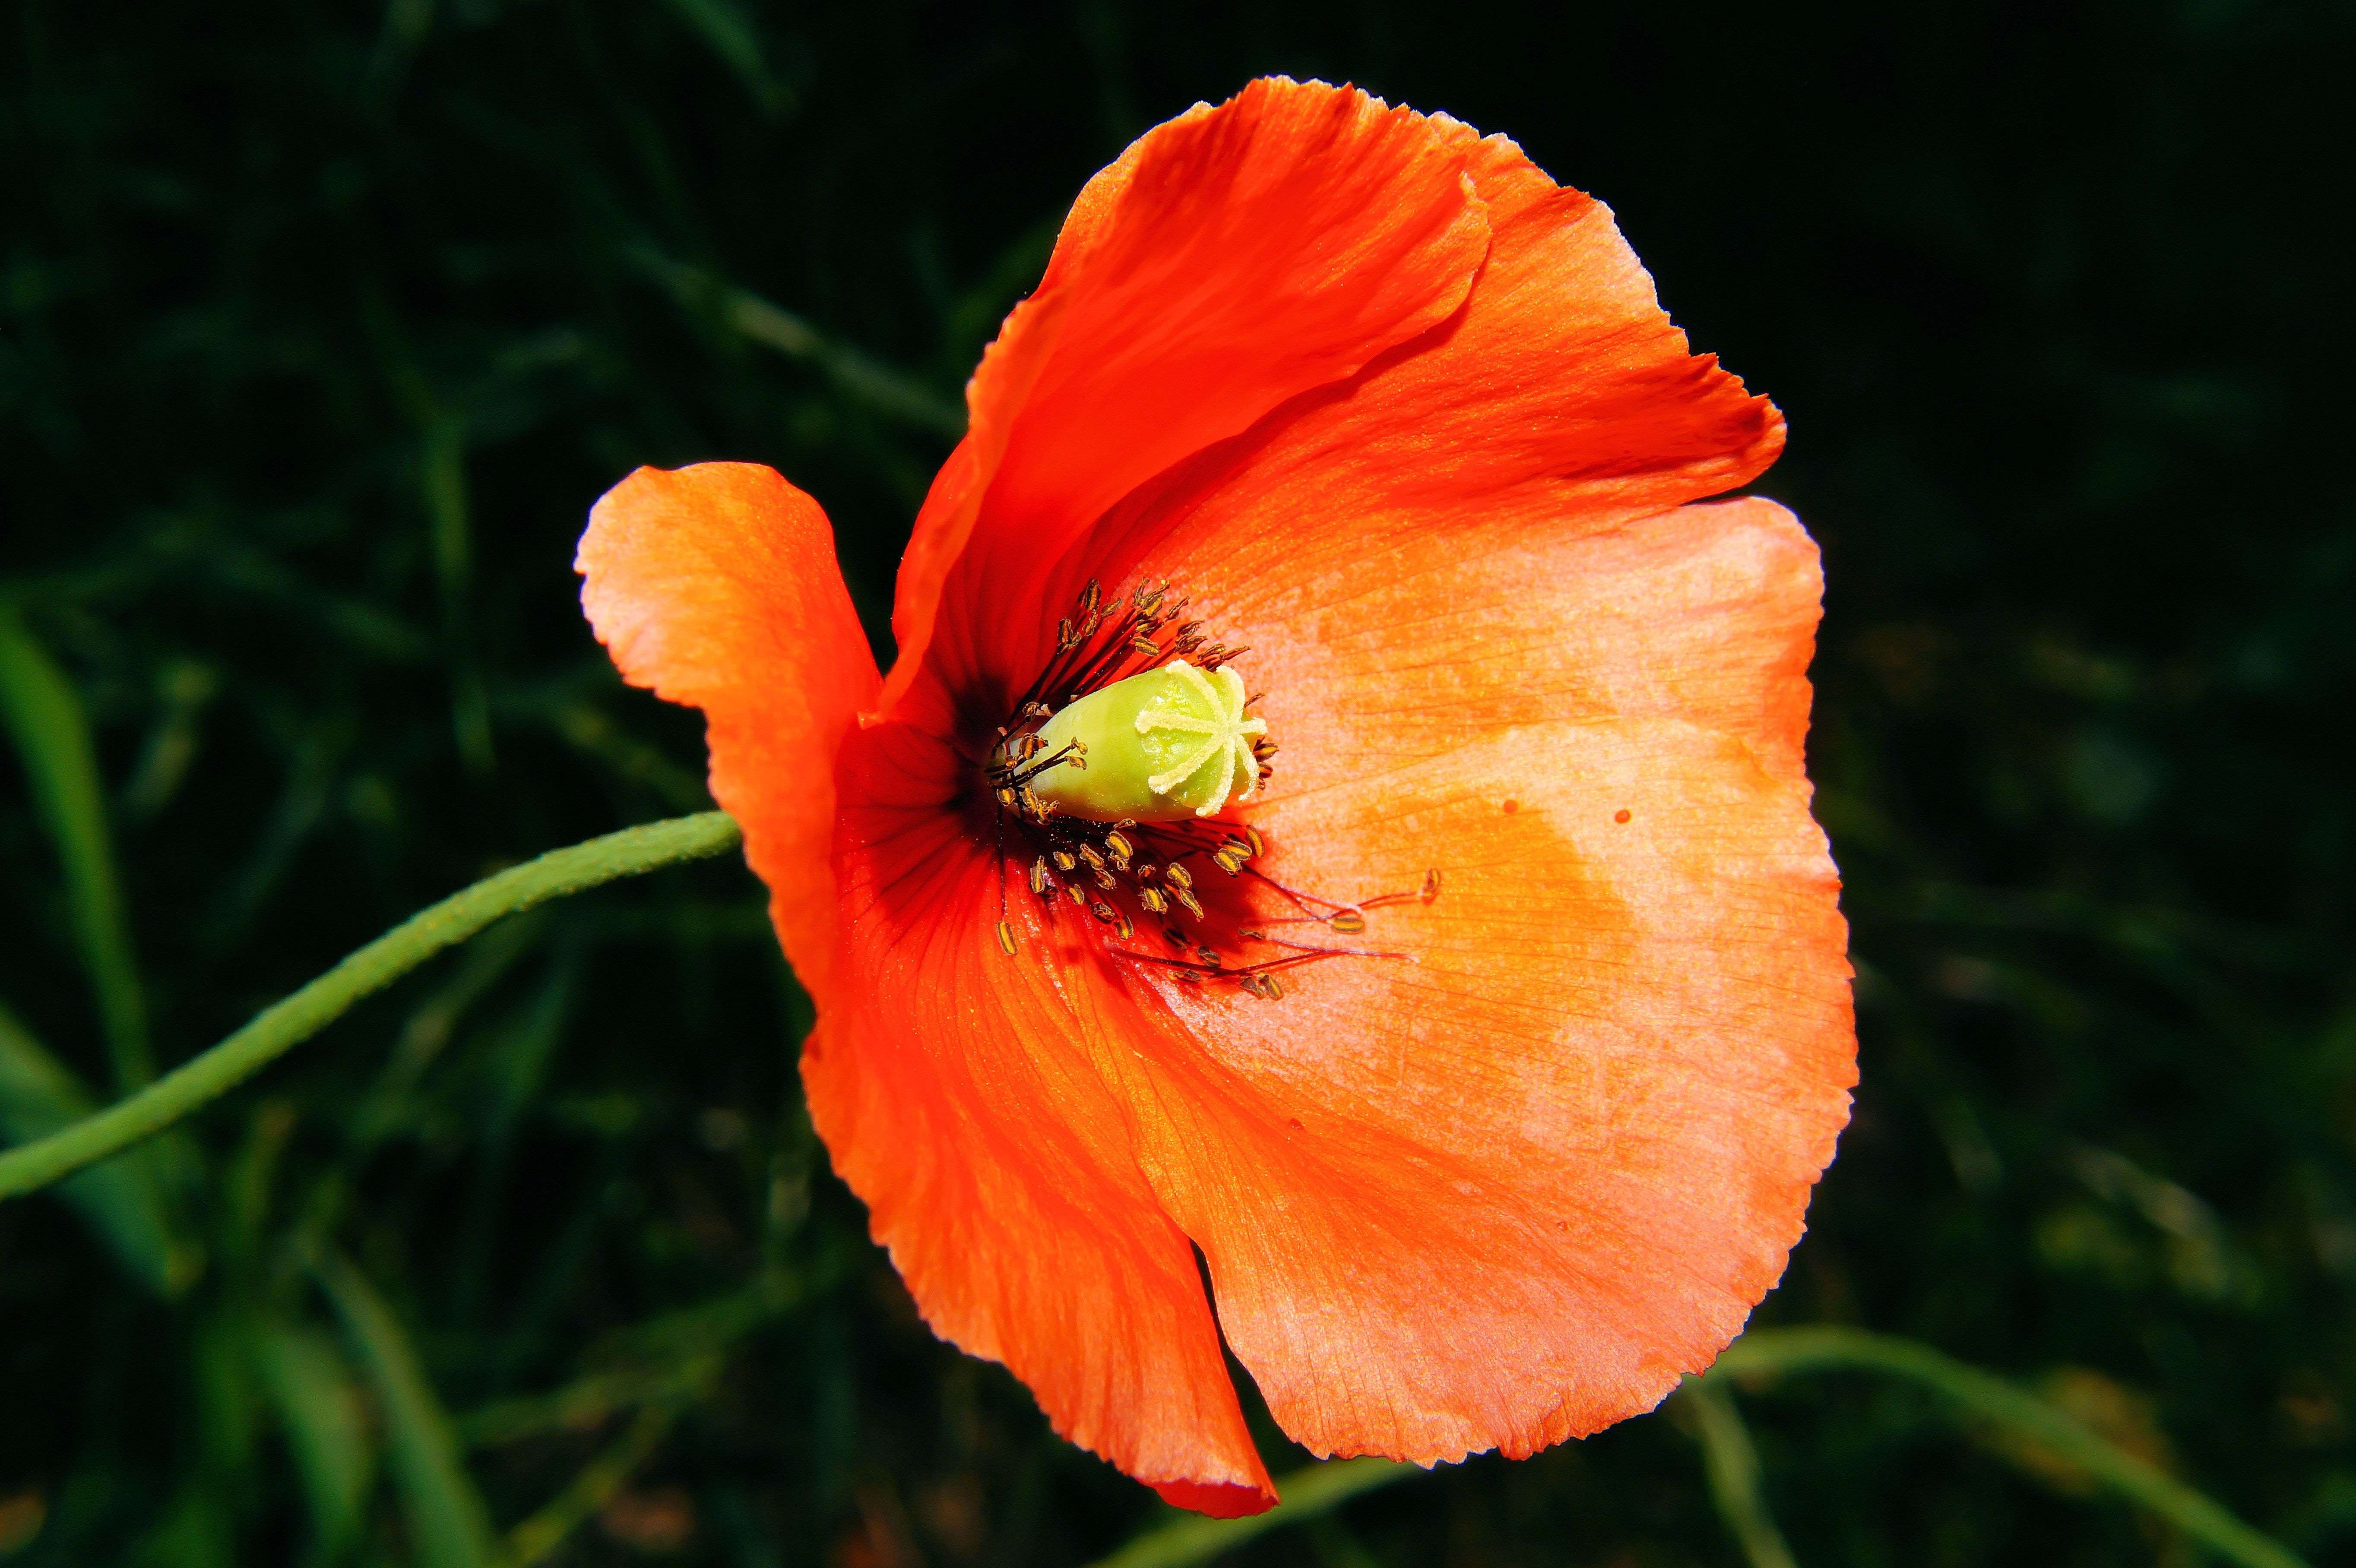 orange poppy in bloom close-up photo